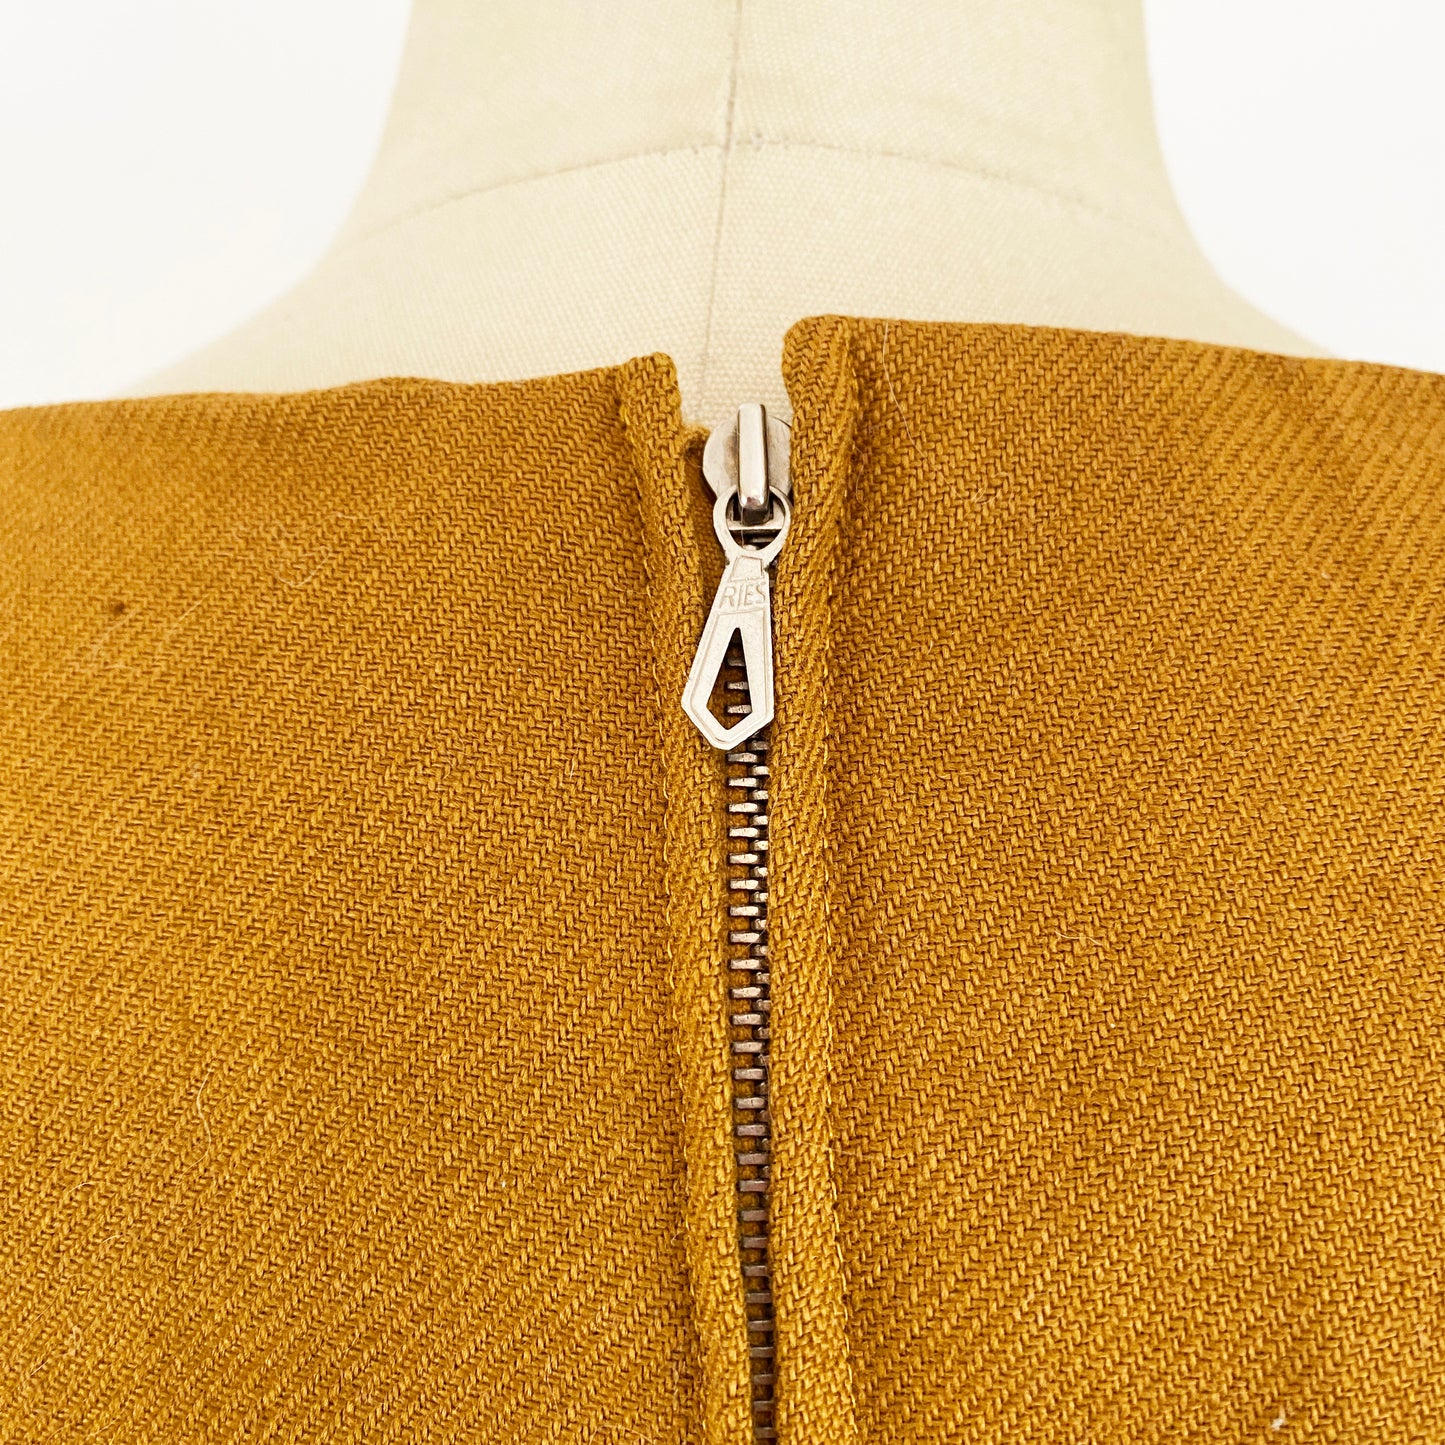 1950s German Goldenrod Wool Sheath Shelf Bust Wiggle Dress / Small